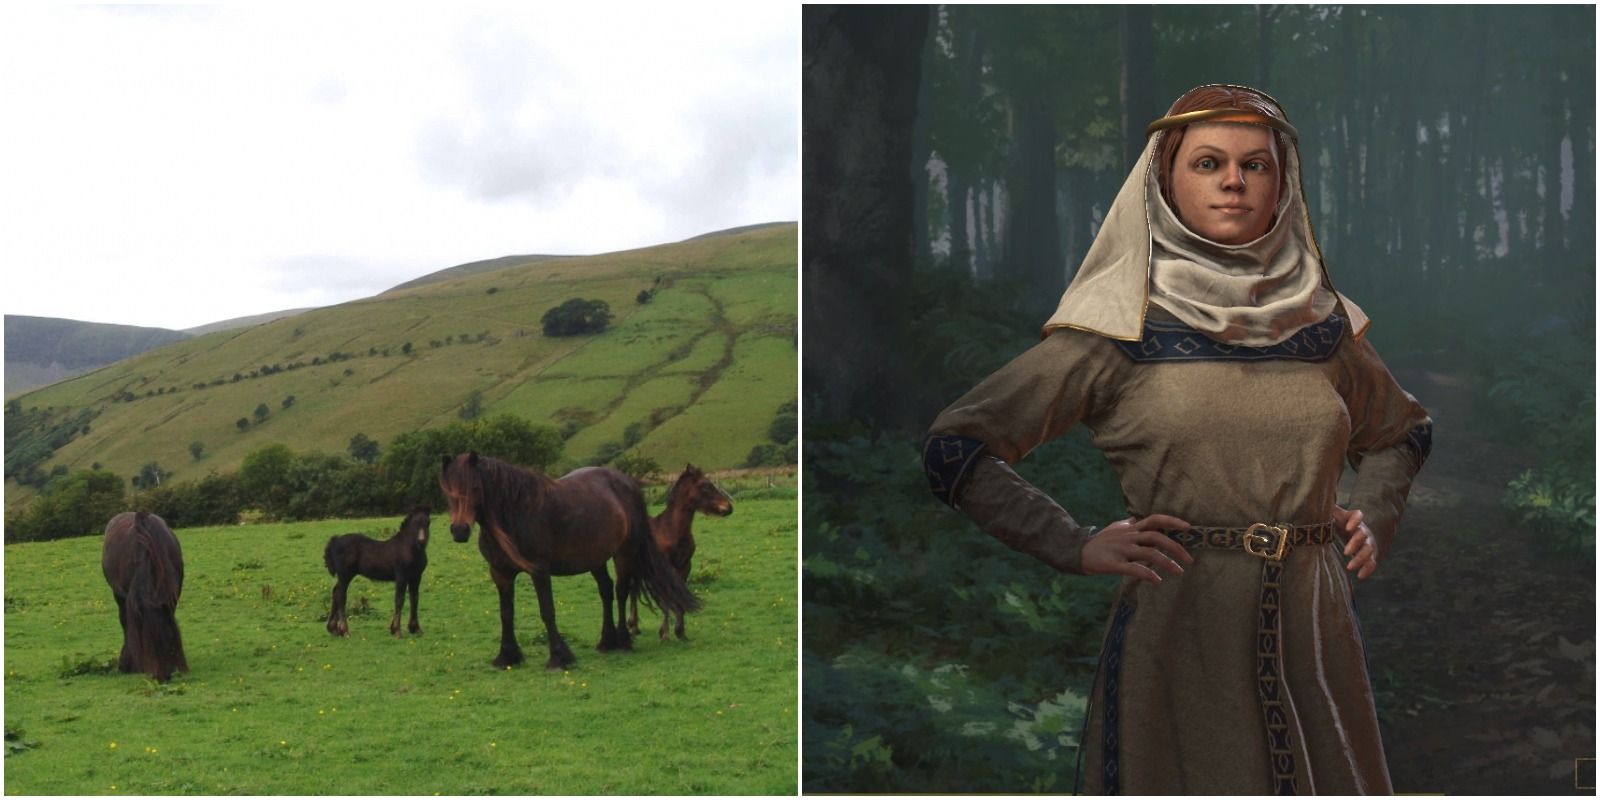 Cumbrian Culture: Fell Ponies and a Cumbrian woman